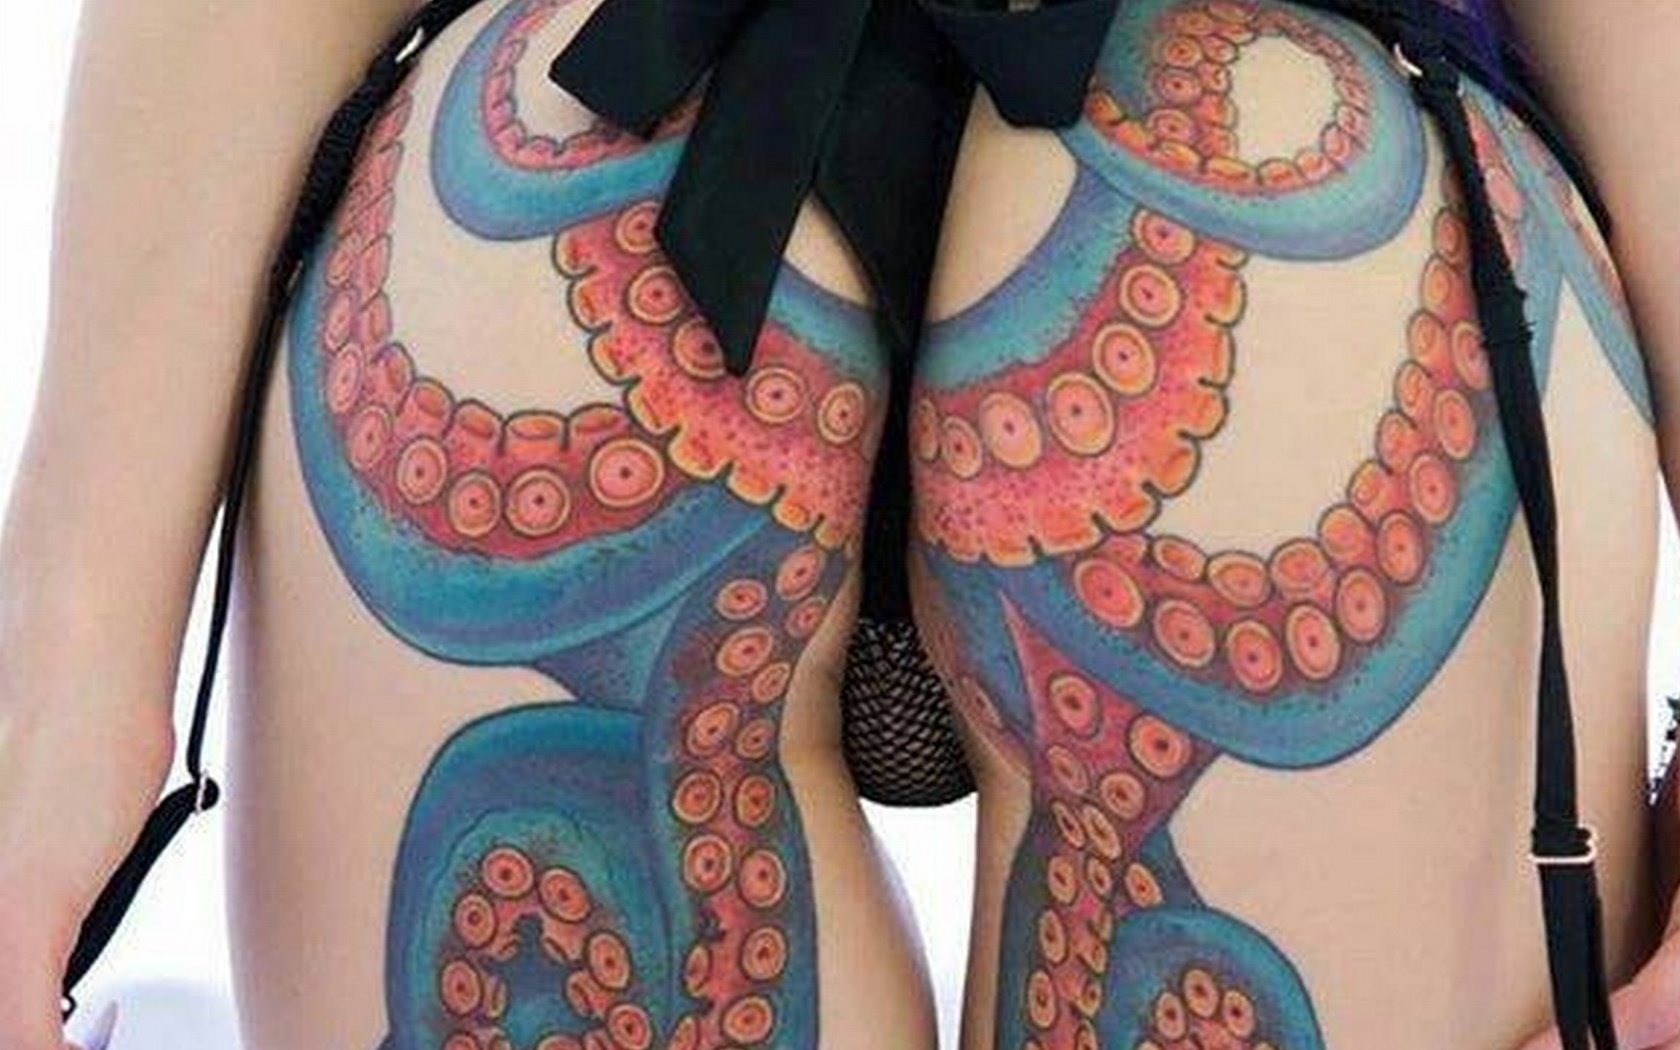 Pornstar with octopus tattoo